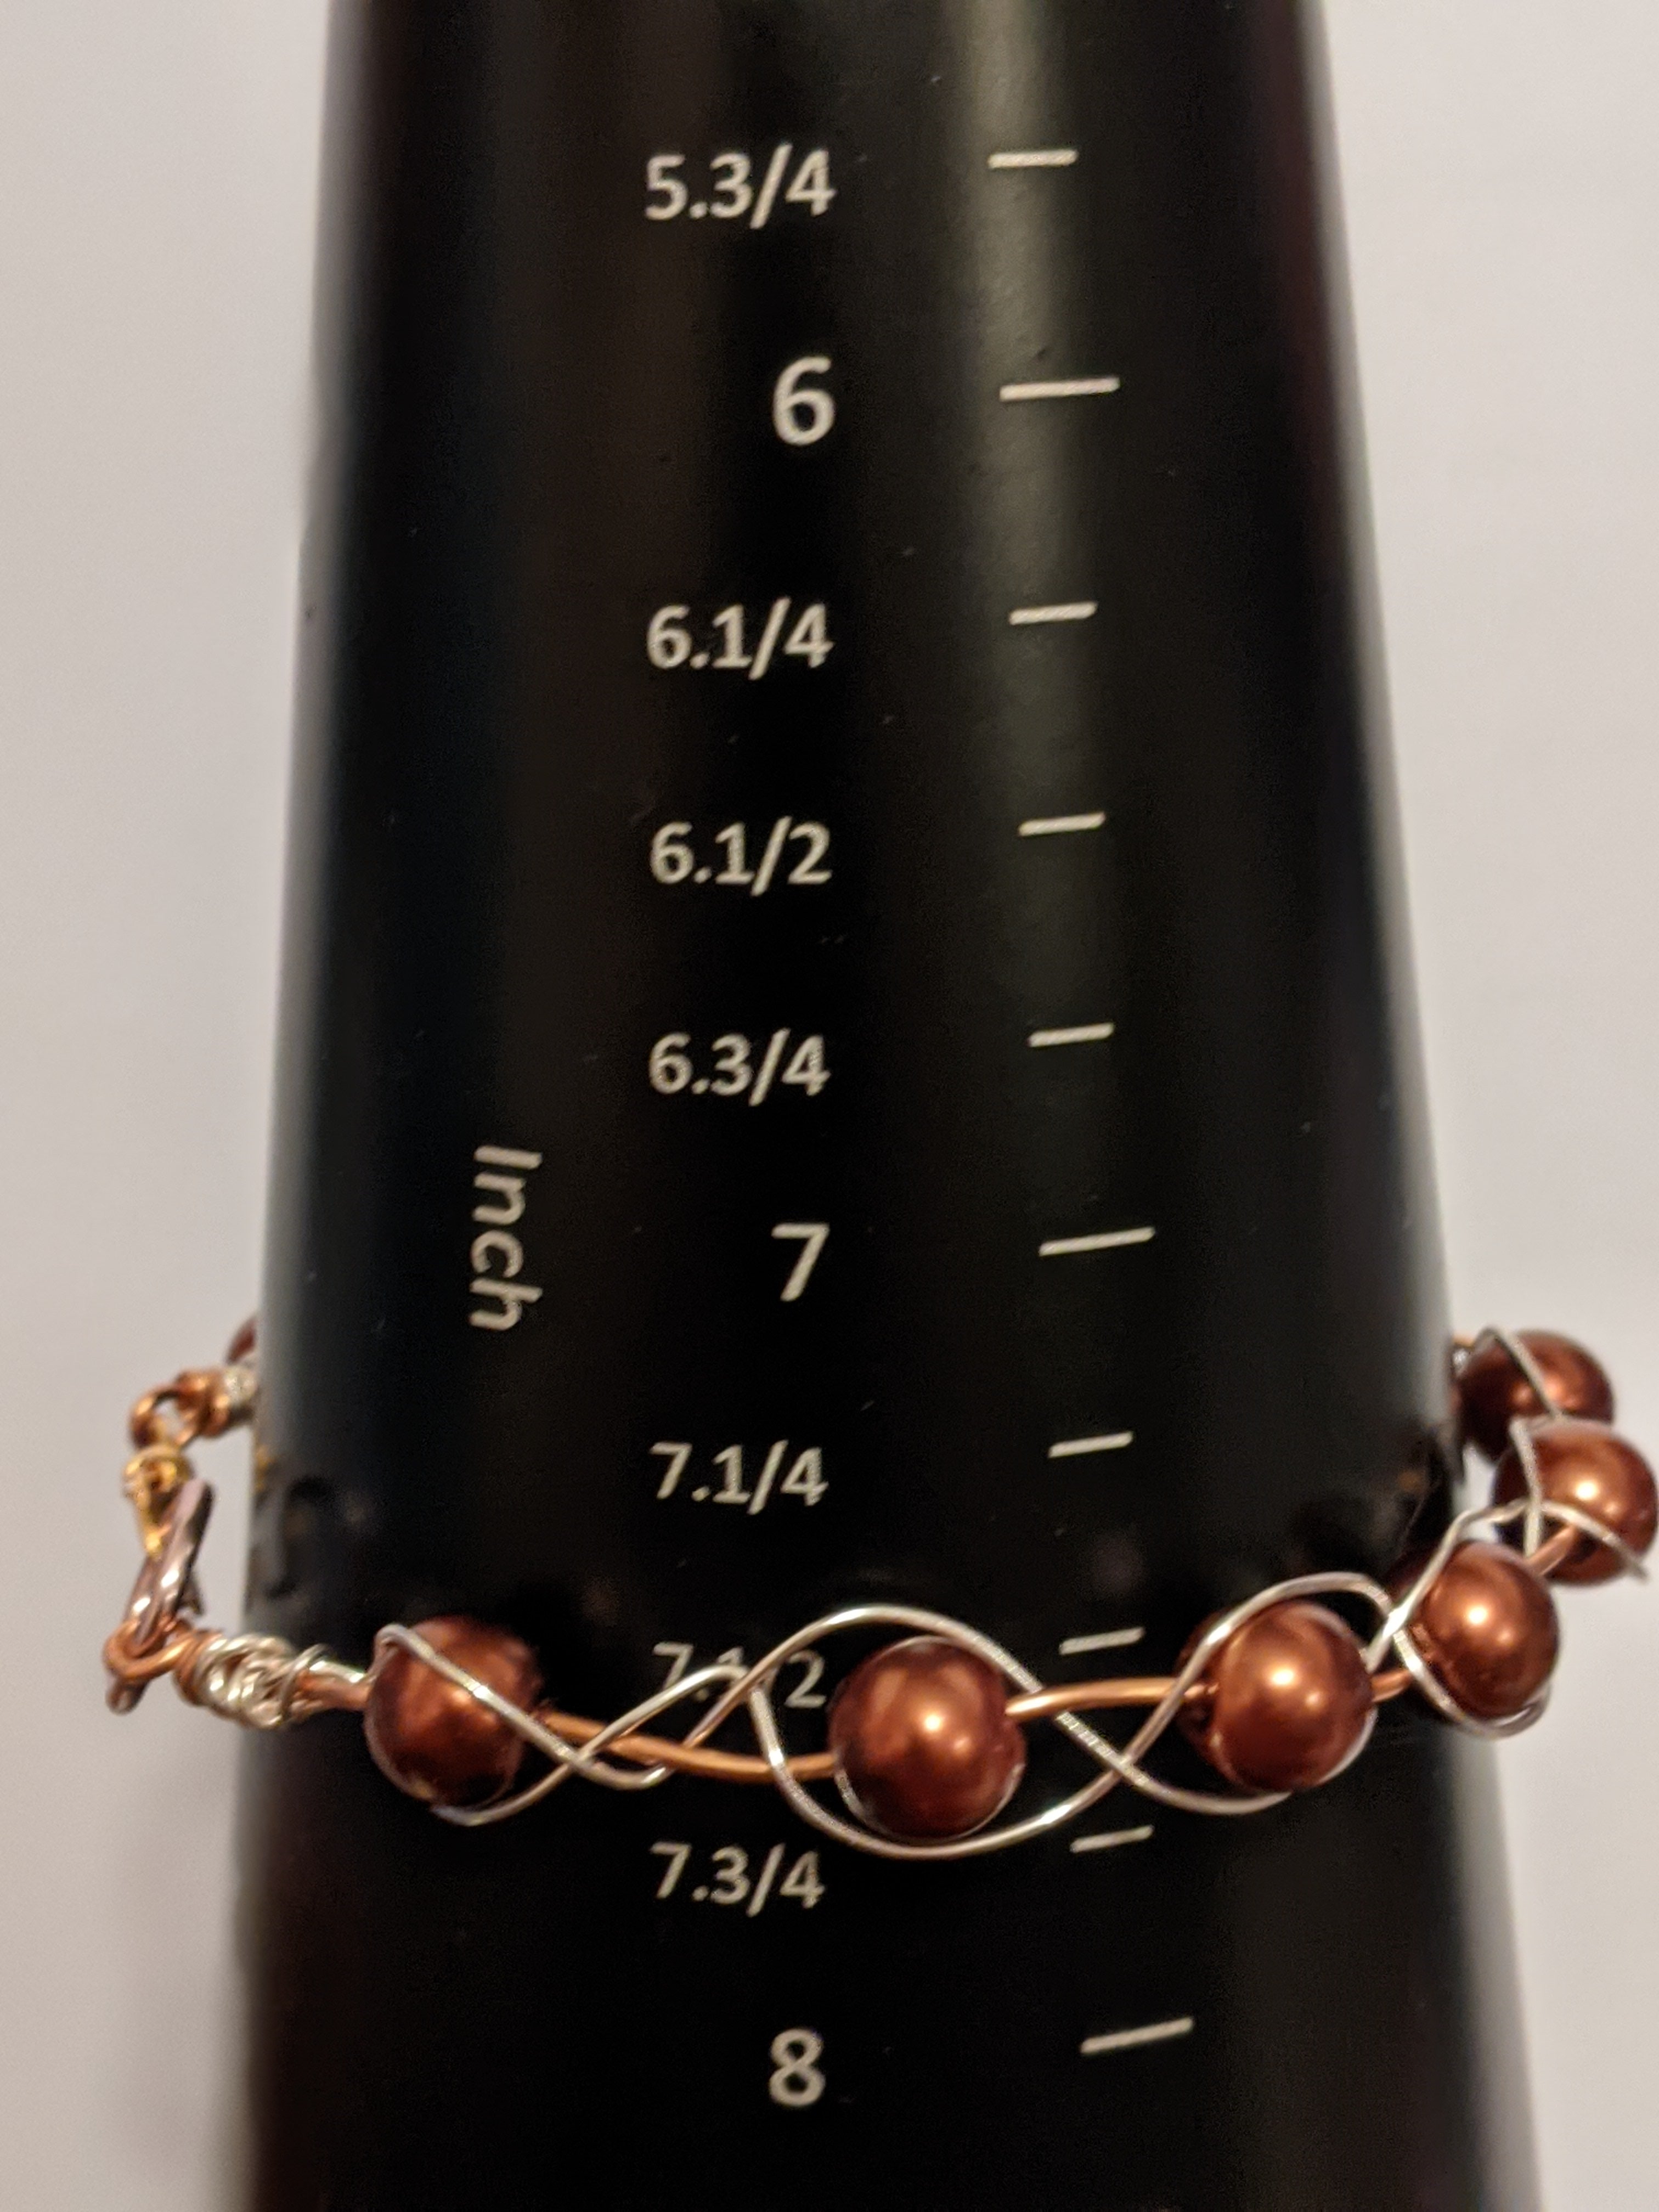 Buy Elegant Pearl Bracelets Australia | Akuna Pearls